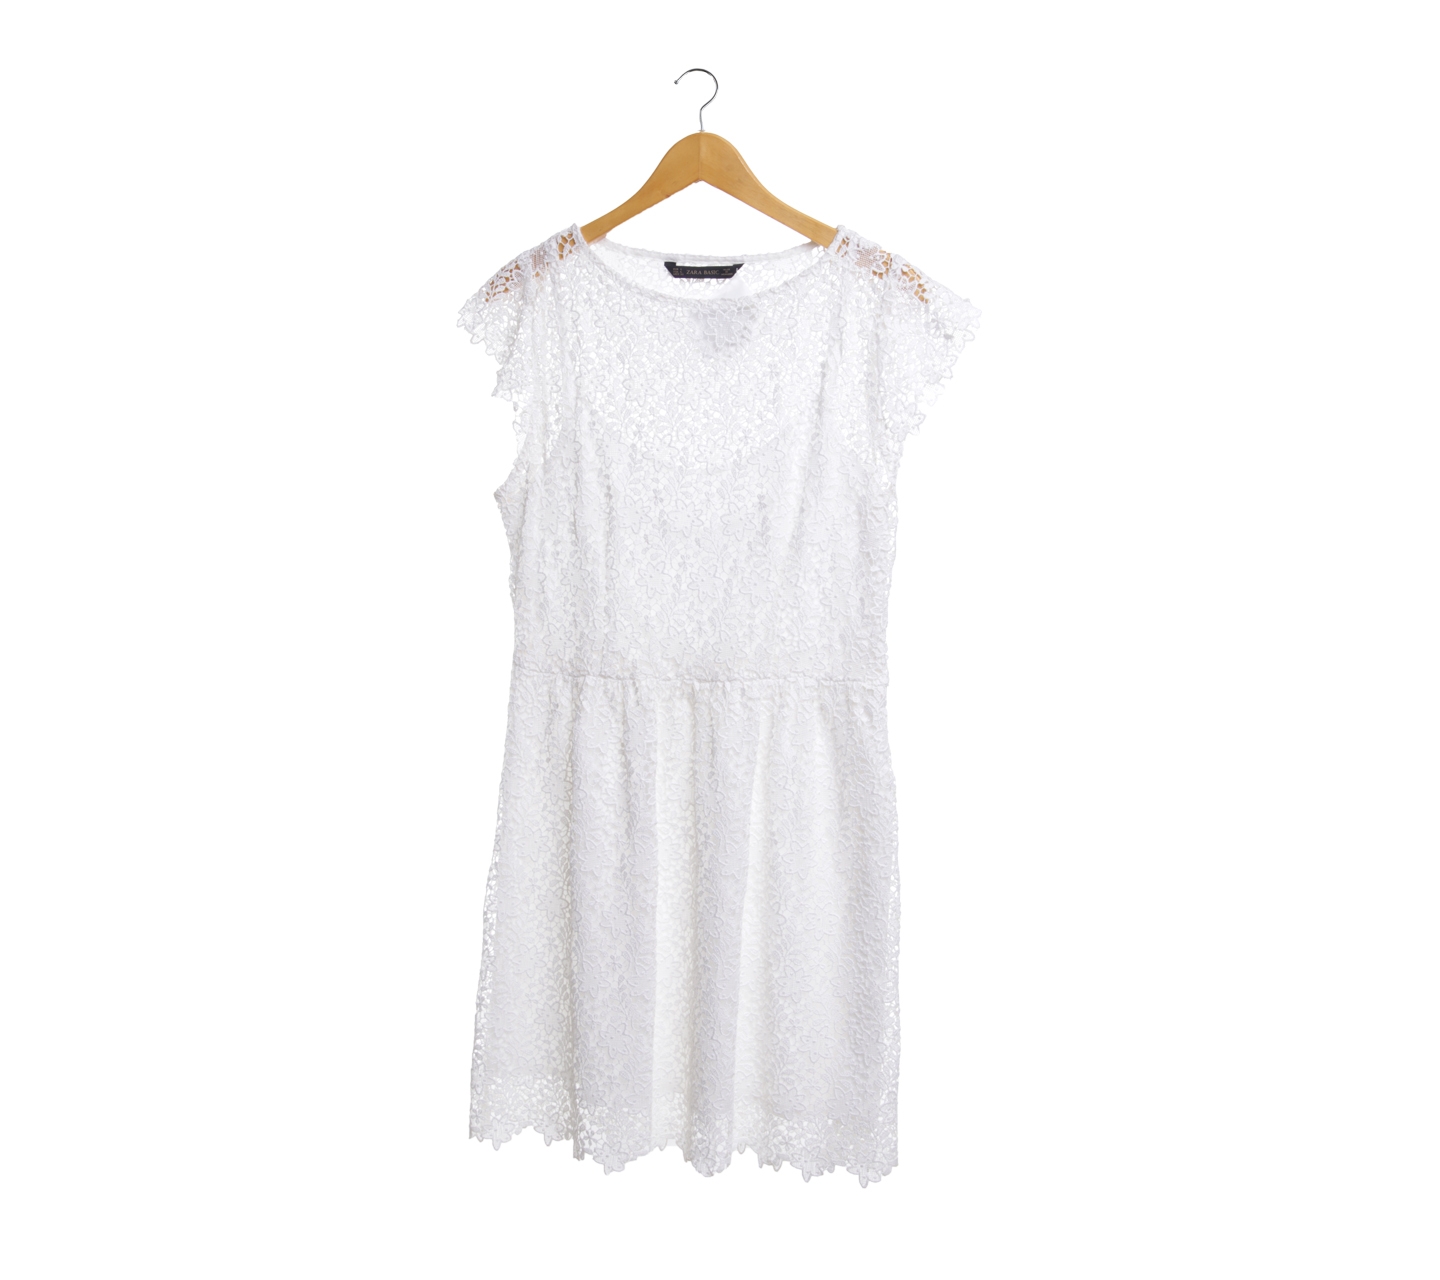 Zara White Lace Midi Dress